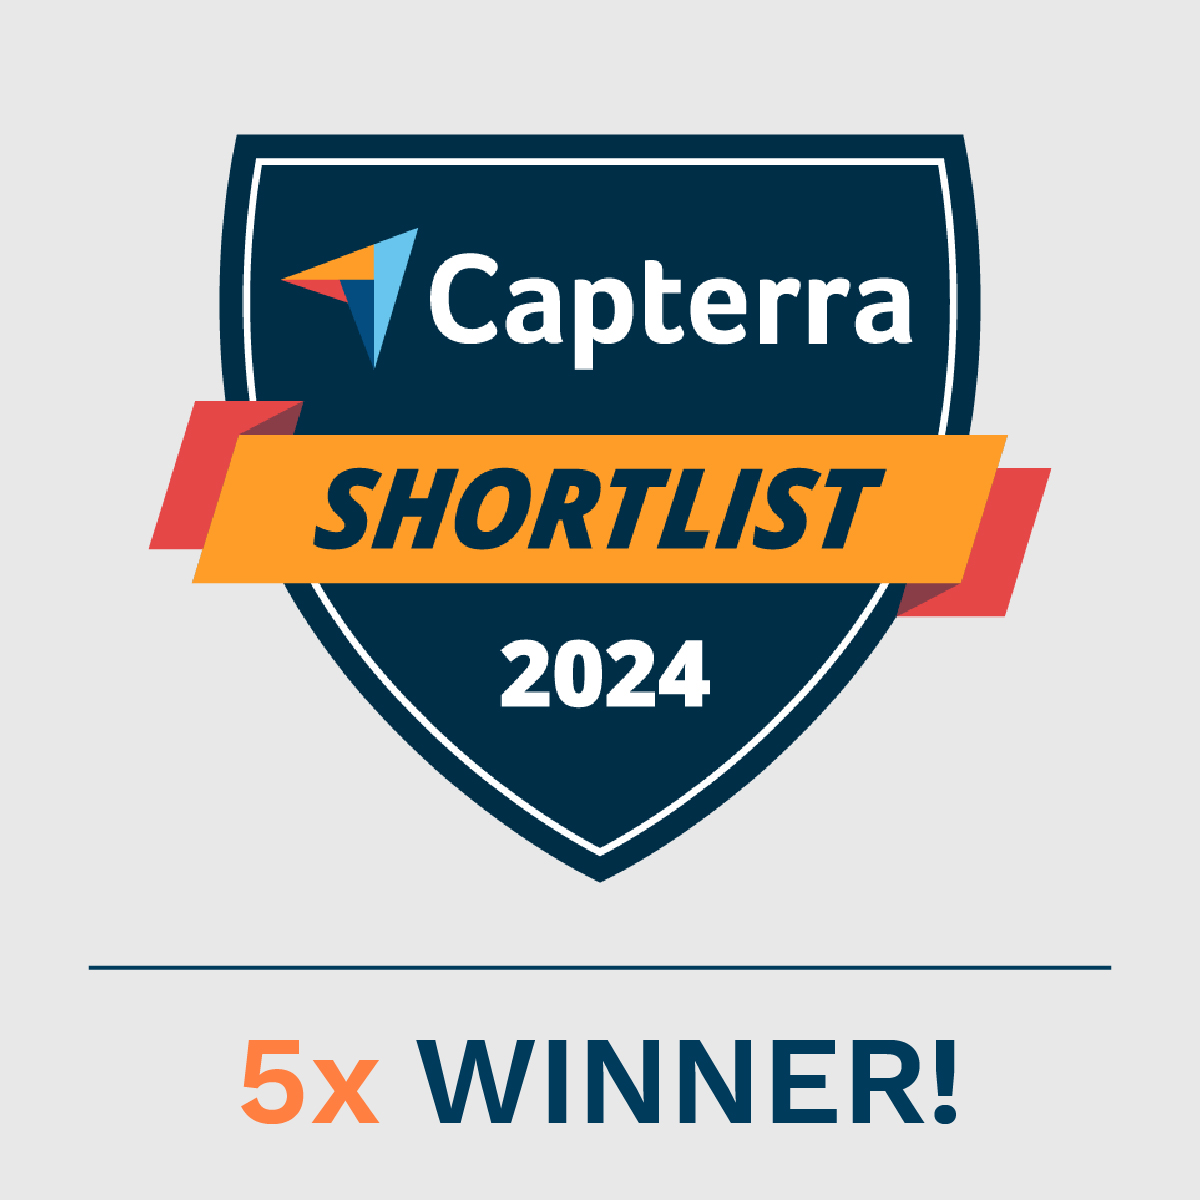 Capterra 2024 Shortlist